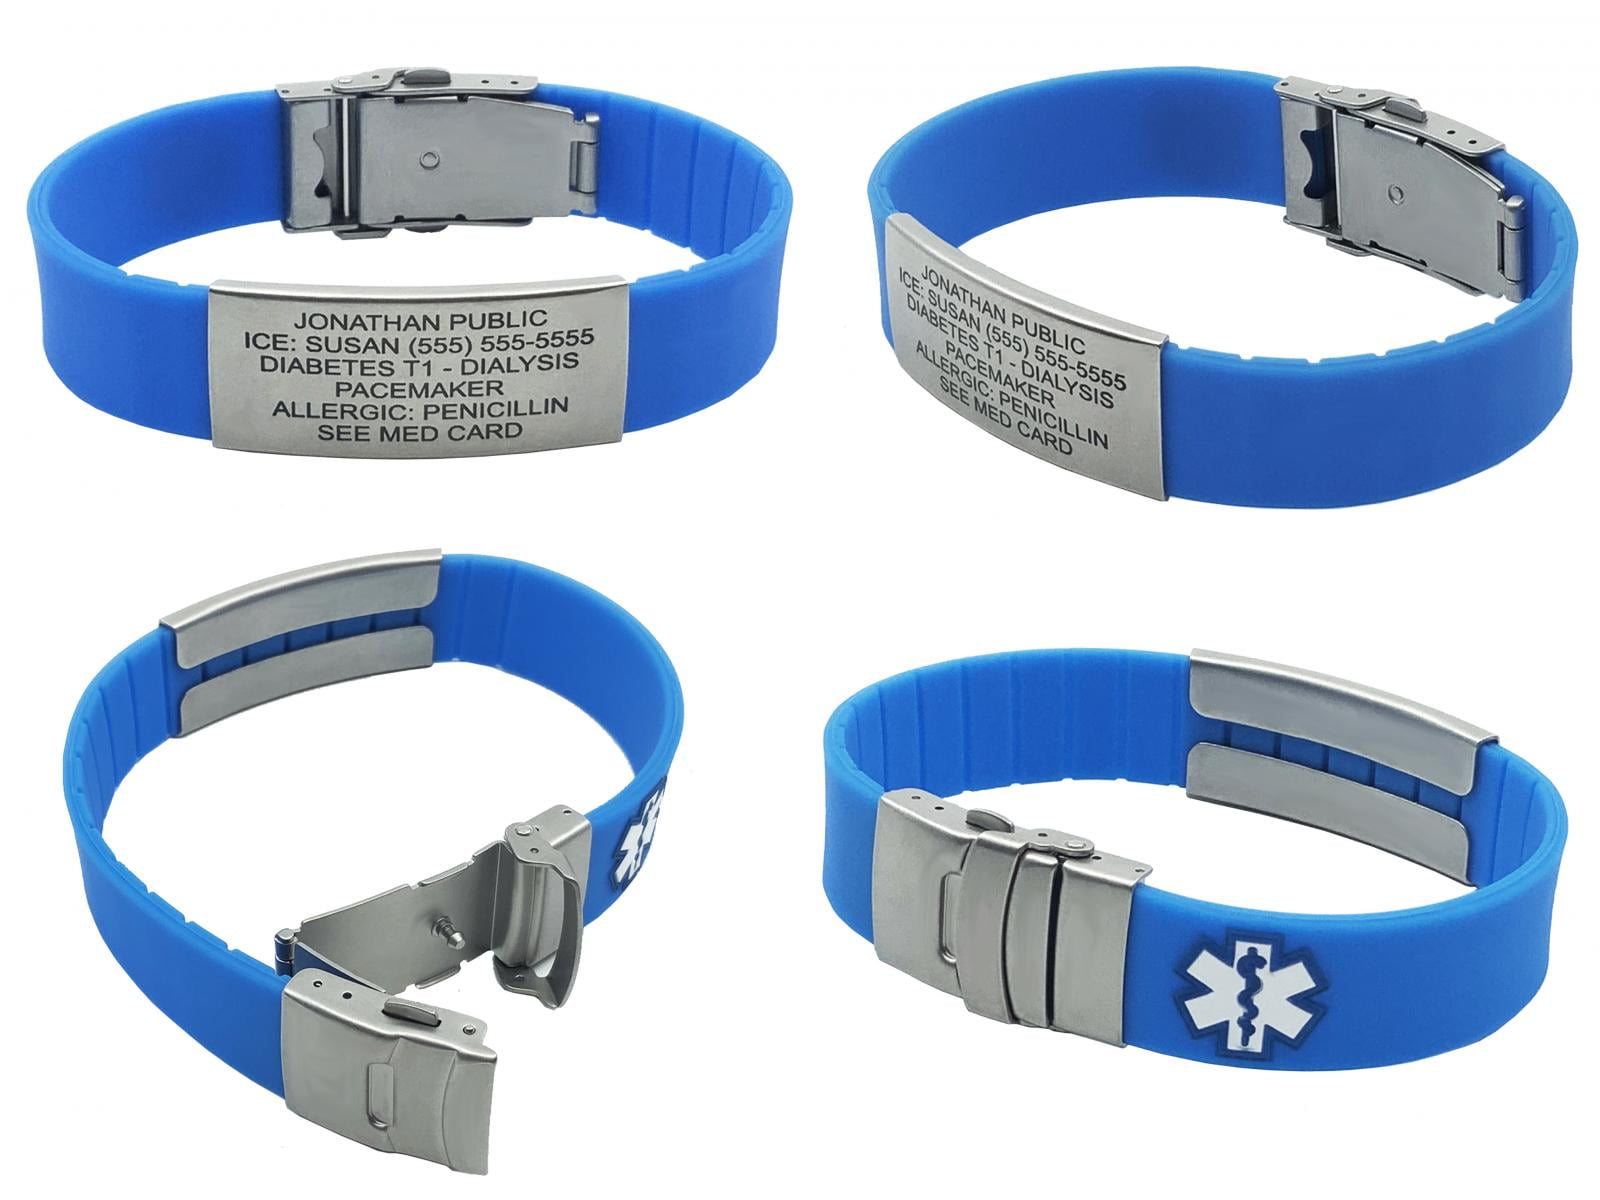 Details more than 84 icd medical alert bracelet latest - ceg.edu.vn